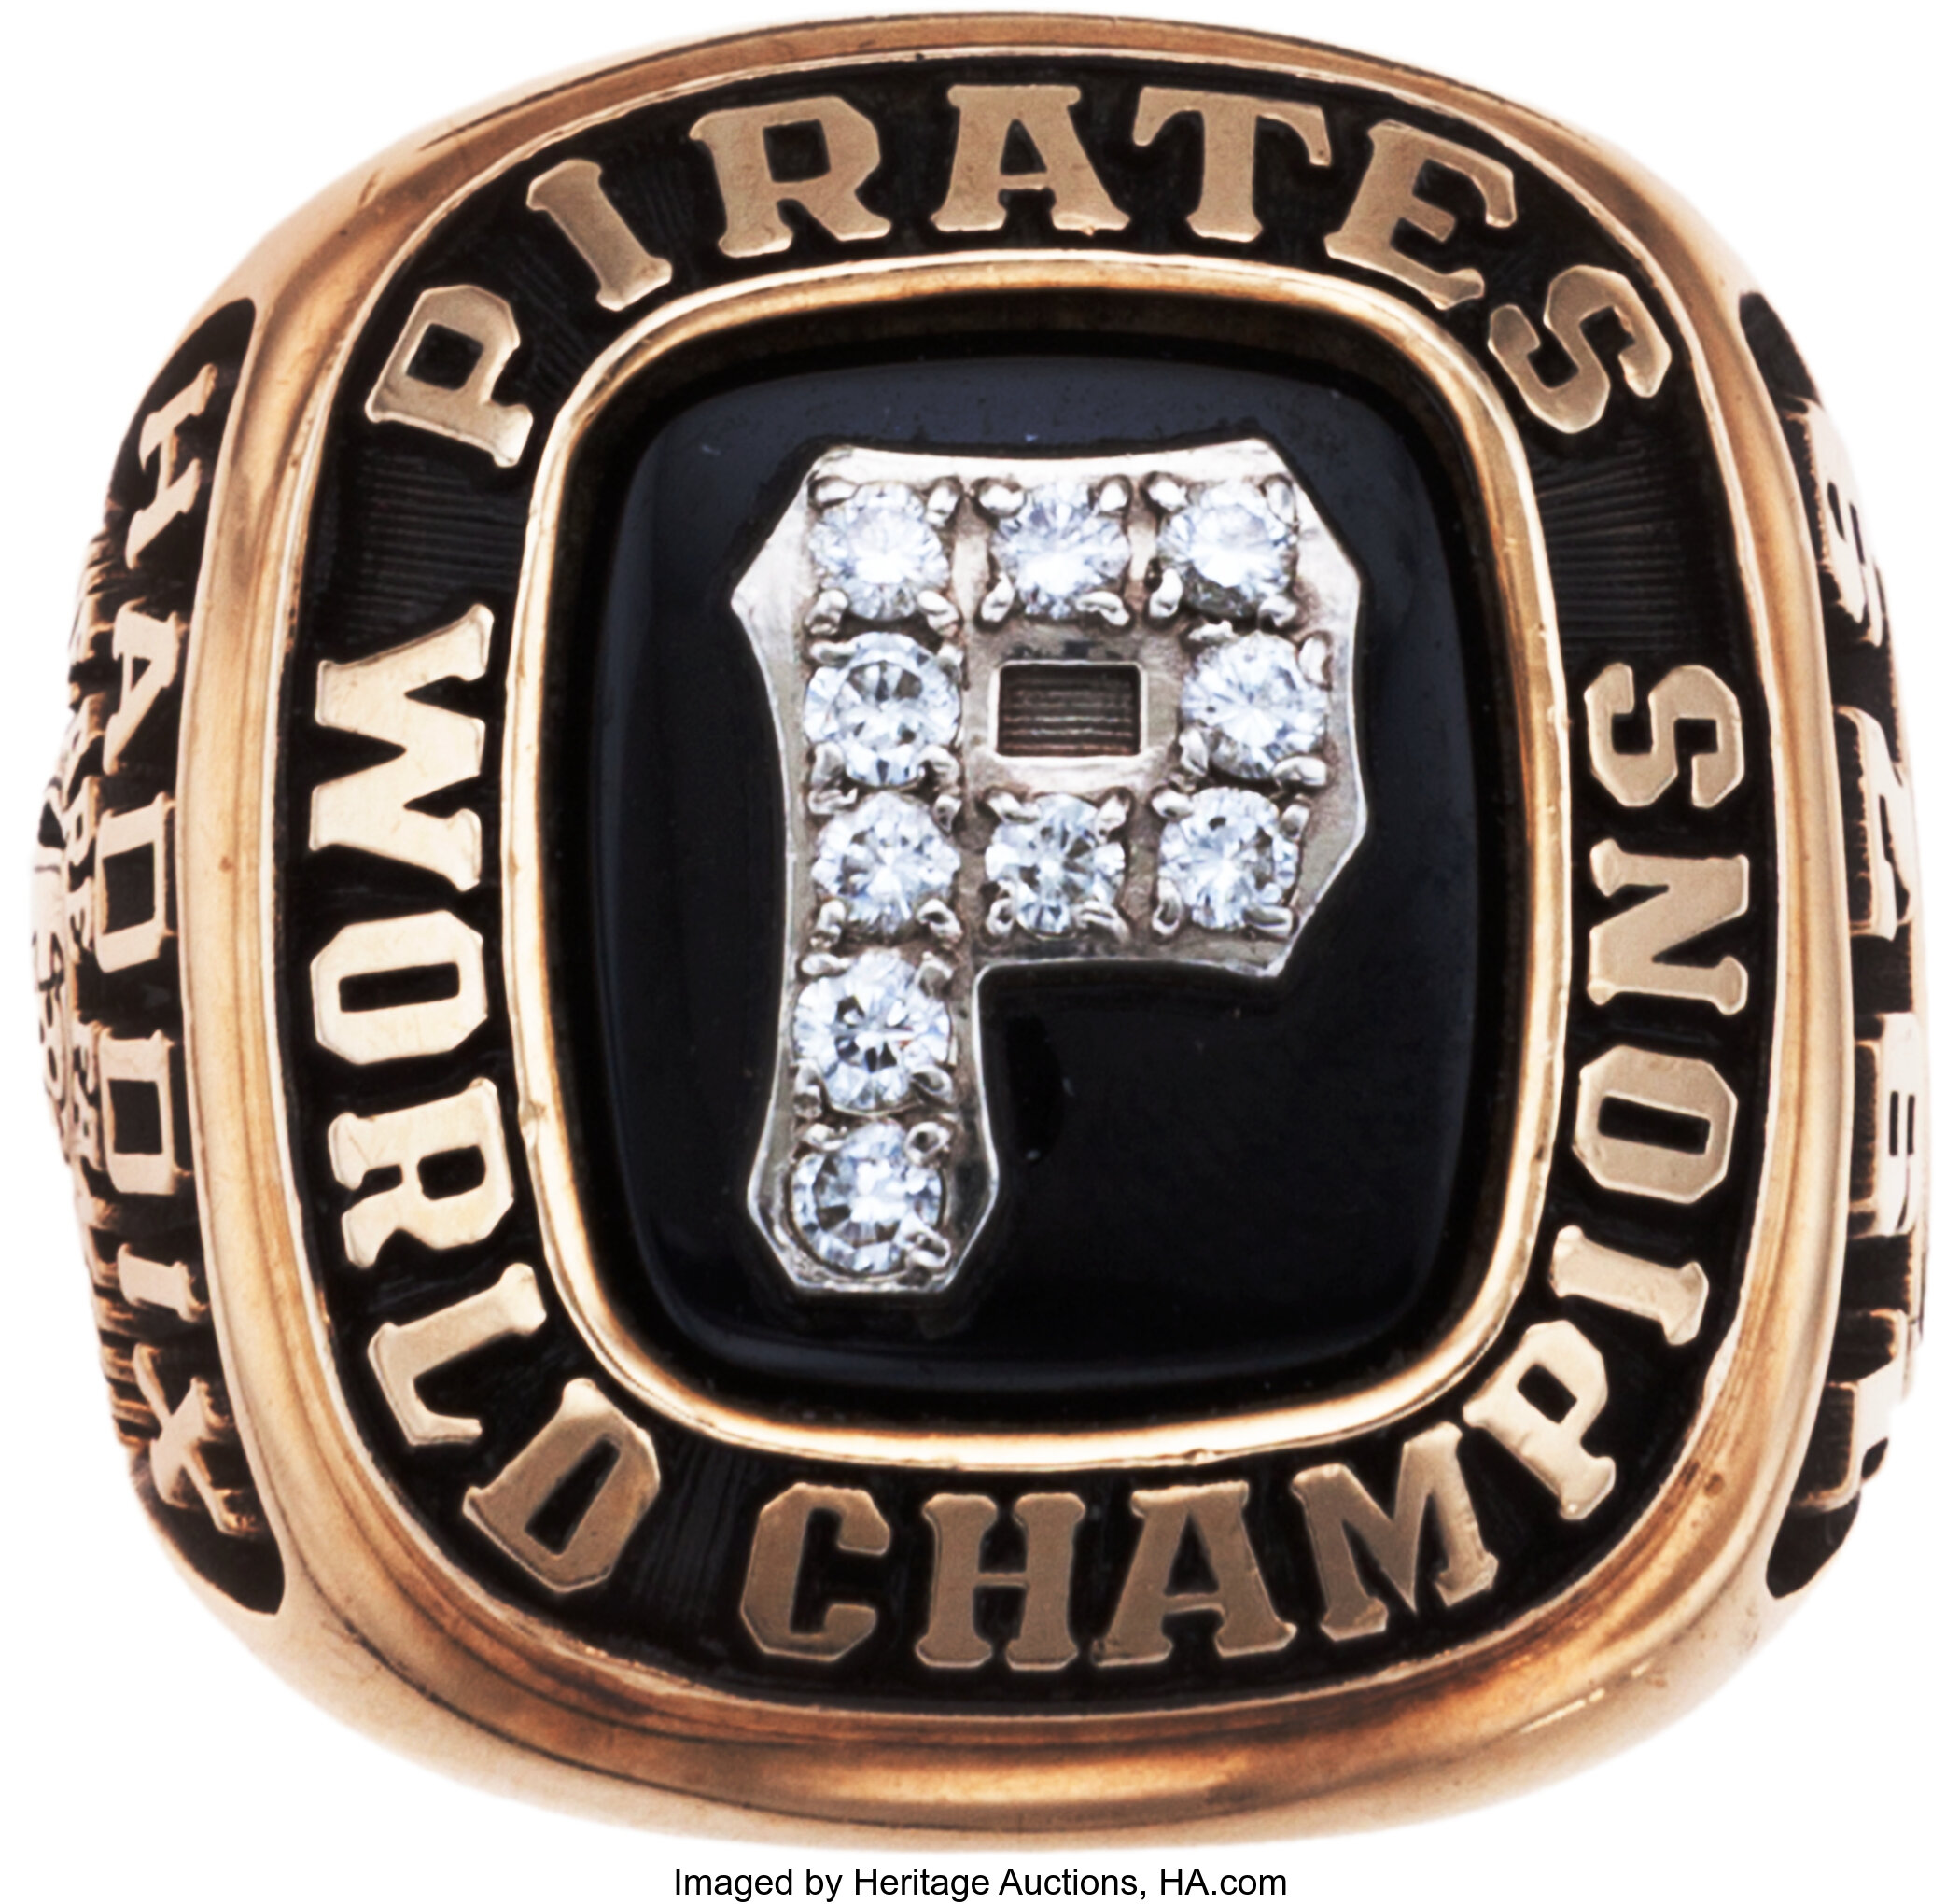 When the Bucs Won It All: The 1979 World Champion Pittsburgh Pirates